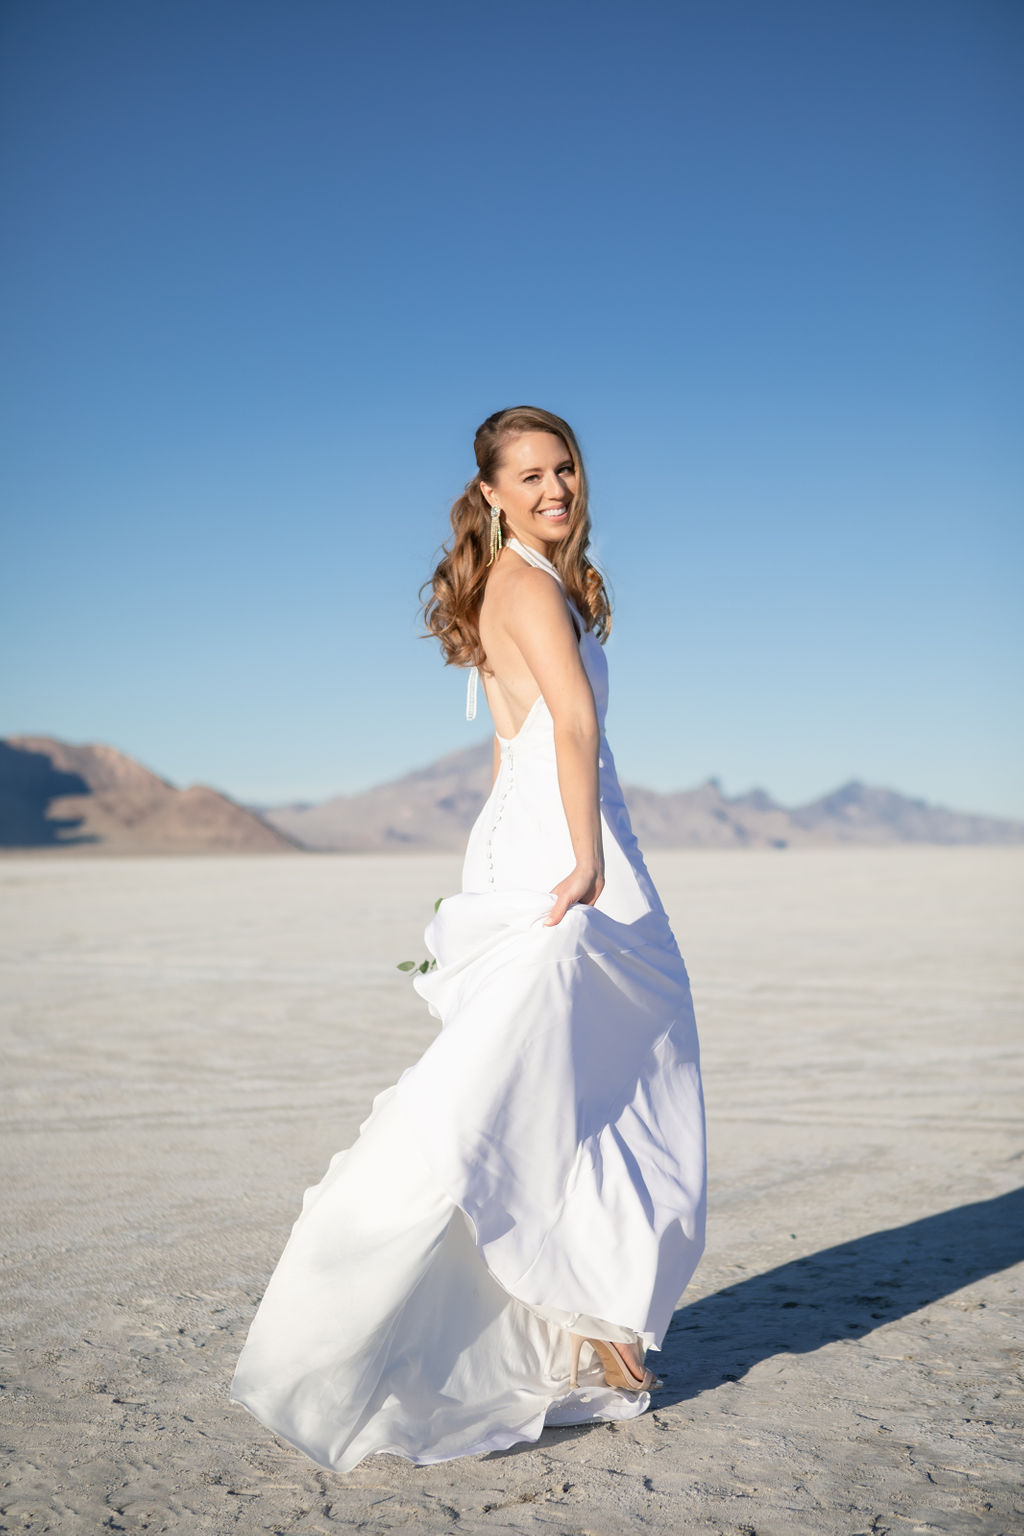 Simple Elegant Modern Goli June Brighton Wedding Dress Victoria Chukarov Salt Flats Utah 3